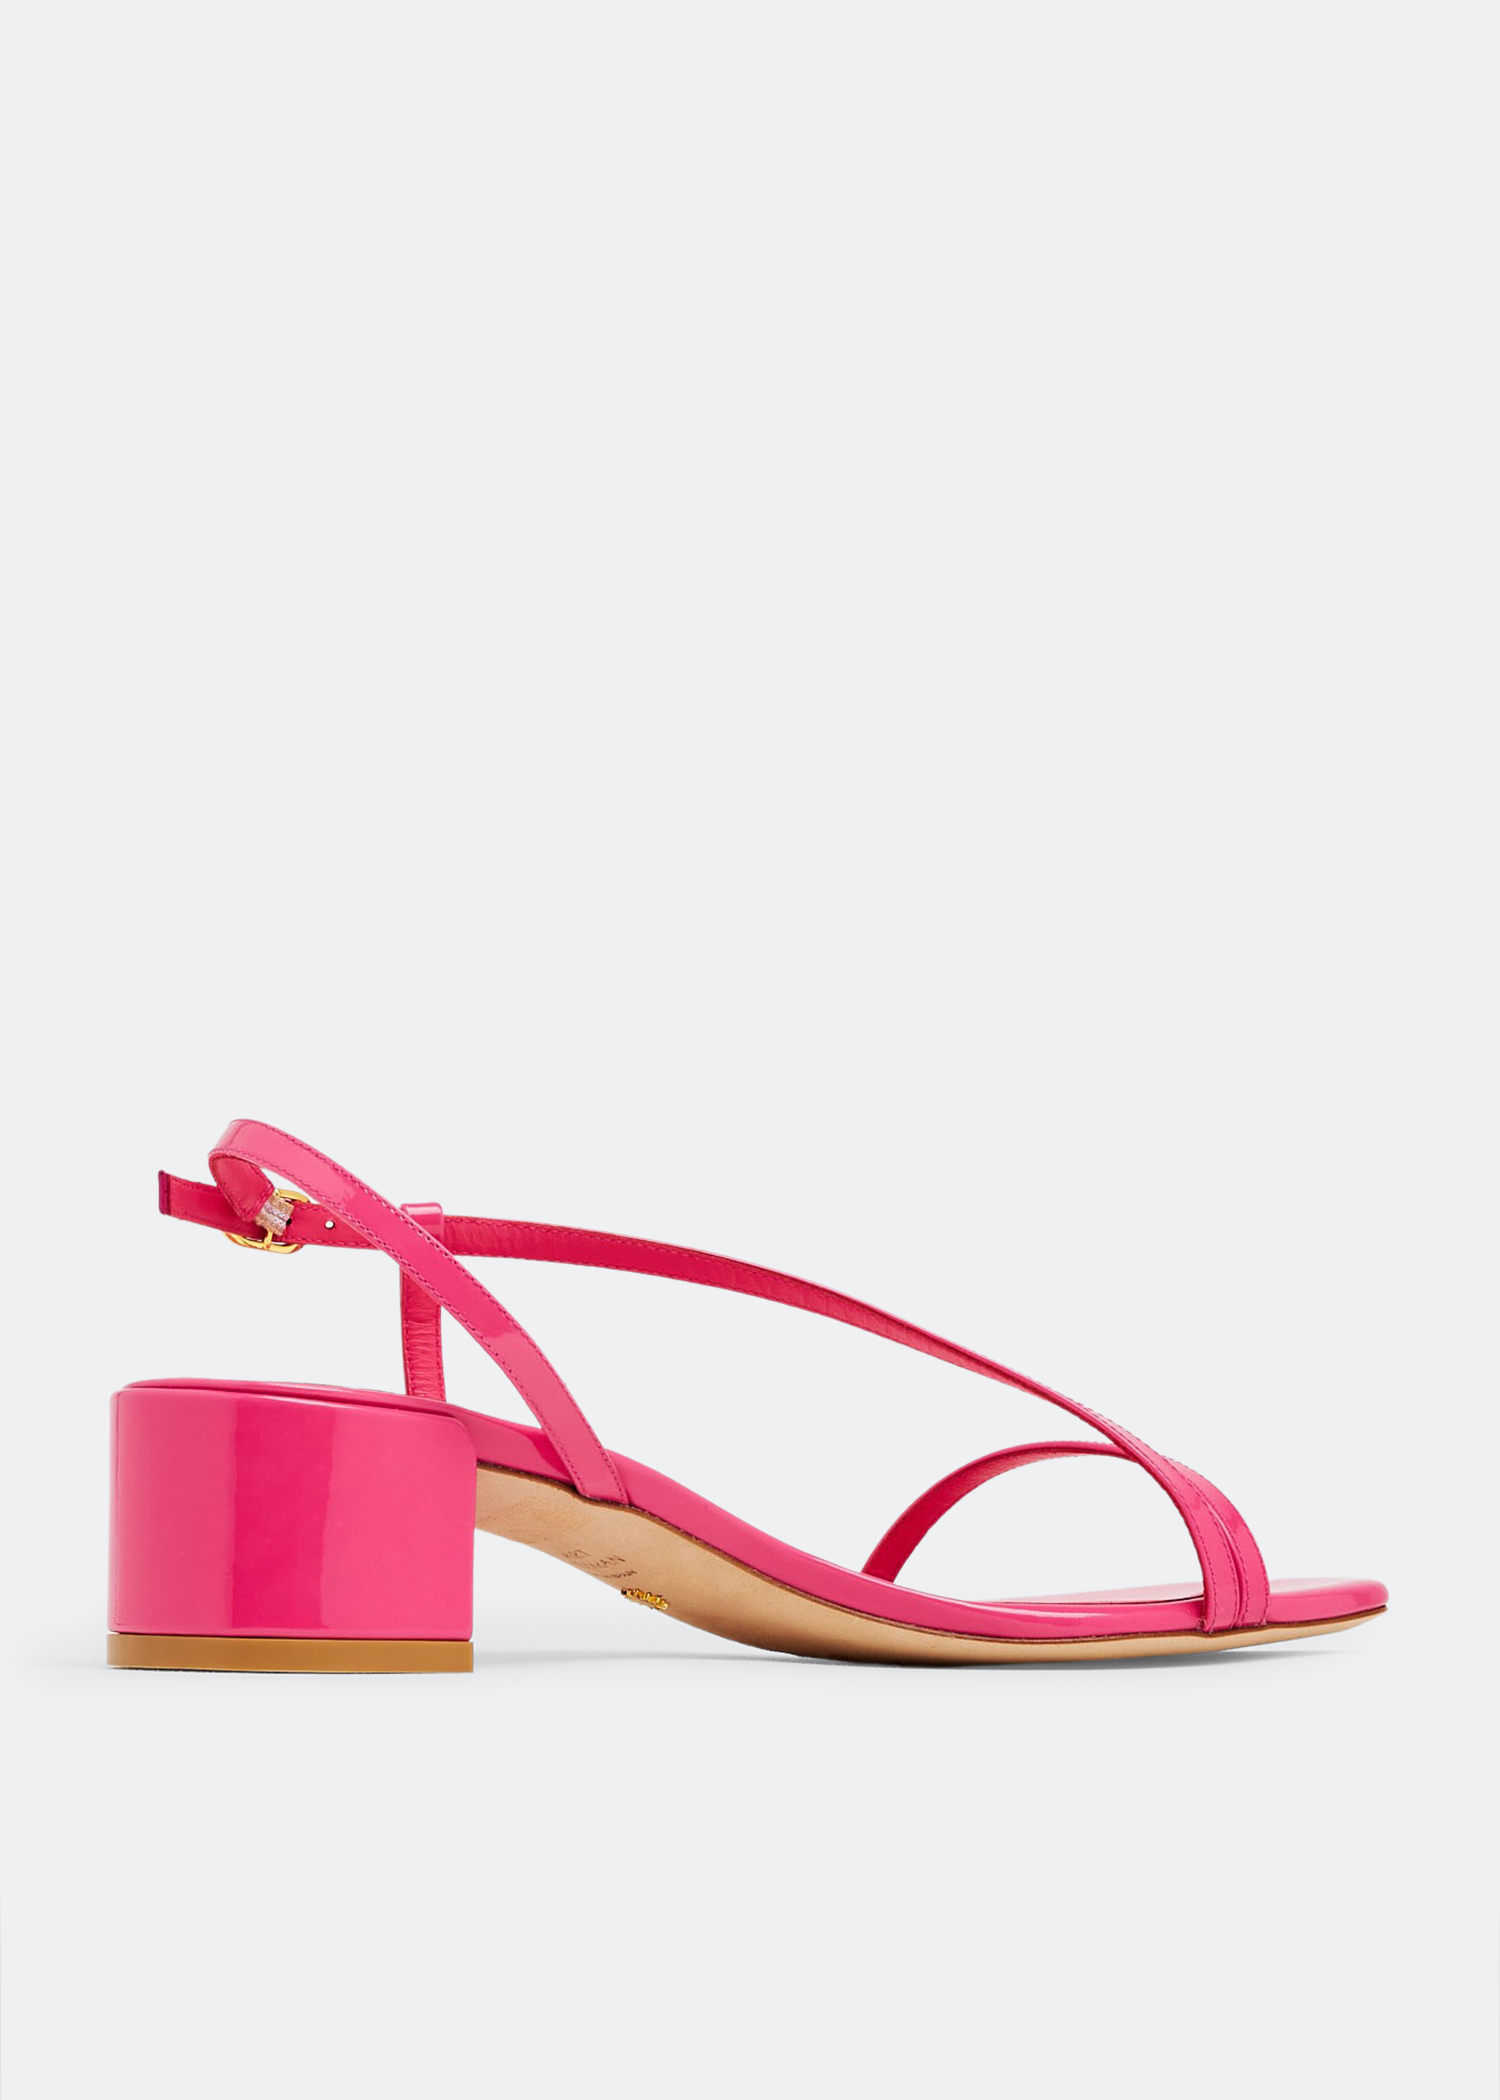 Stuart Weitzman Soiree 35 sandals for Women - Pink in KSA | Level 